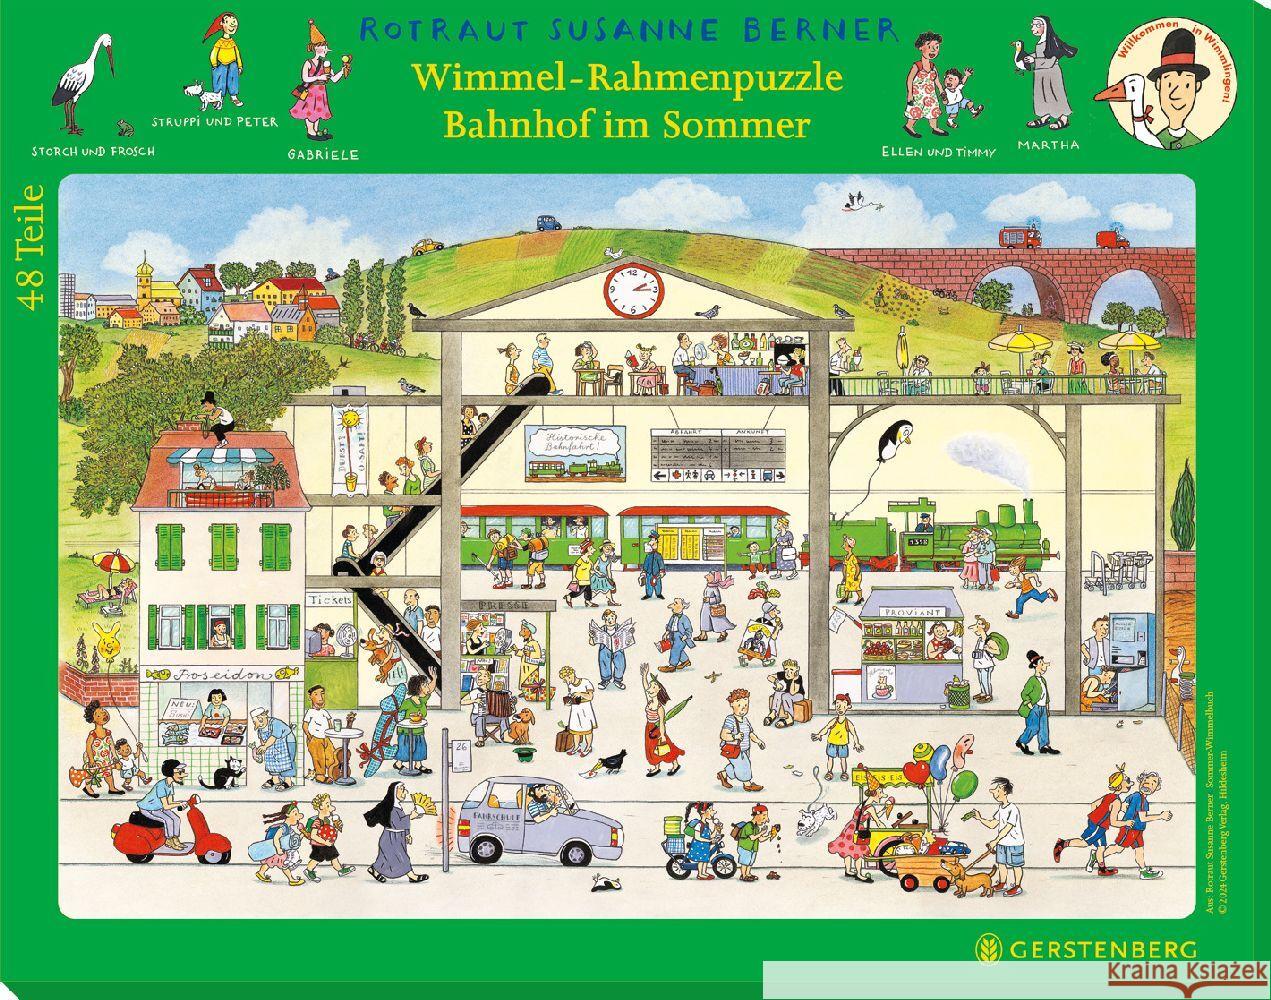 Wimmel-Rahmenpuzzle Sommer Motiv Bahnhof Berner, Rotraut Susanne 4250915936574